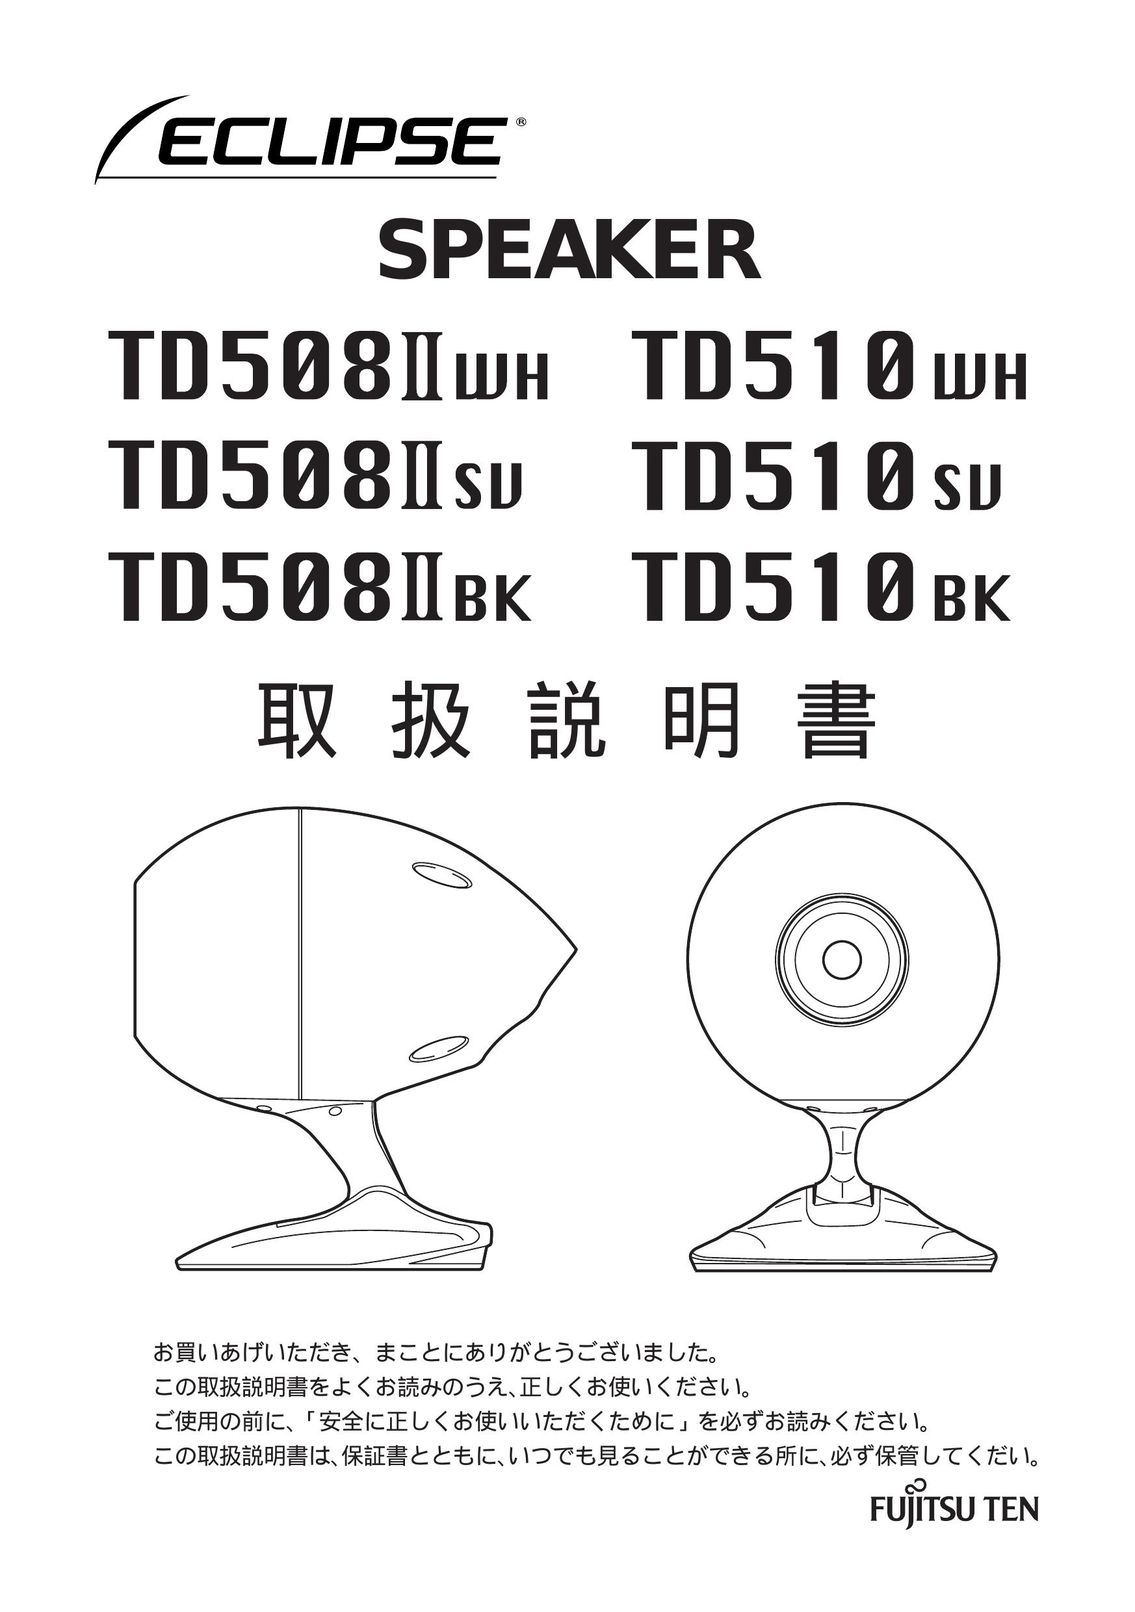 Eclipse - Fujitsu Ten TD508II BK Car Speaker User Manual